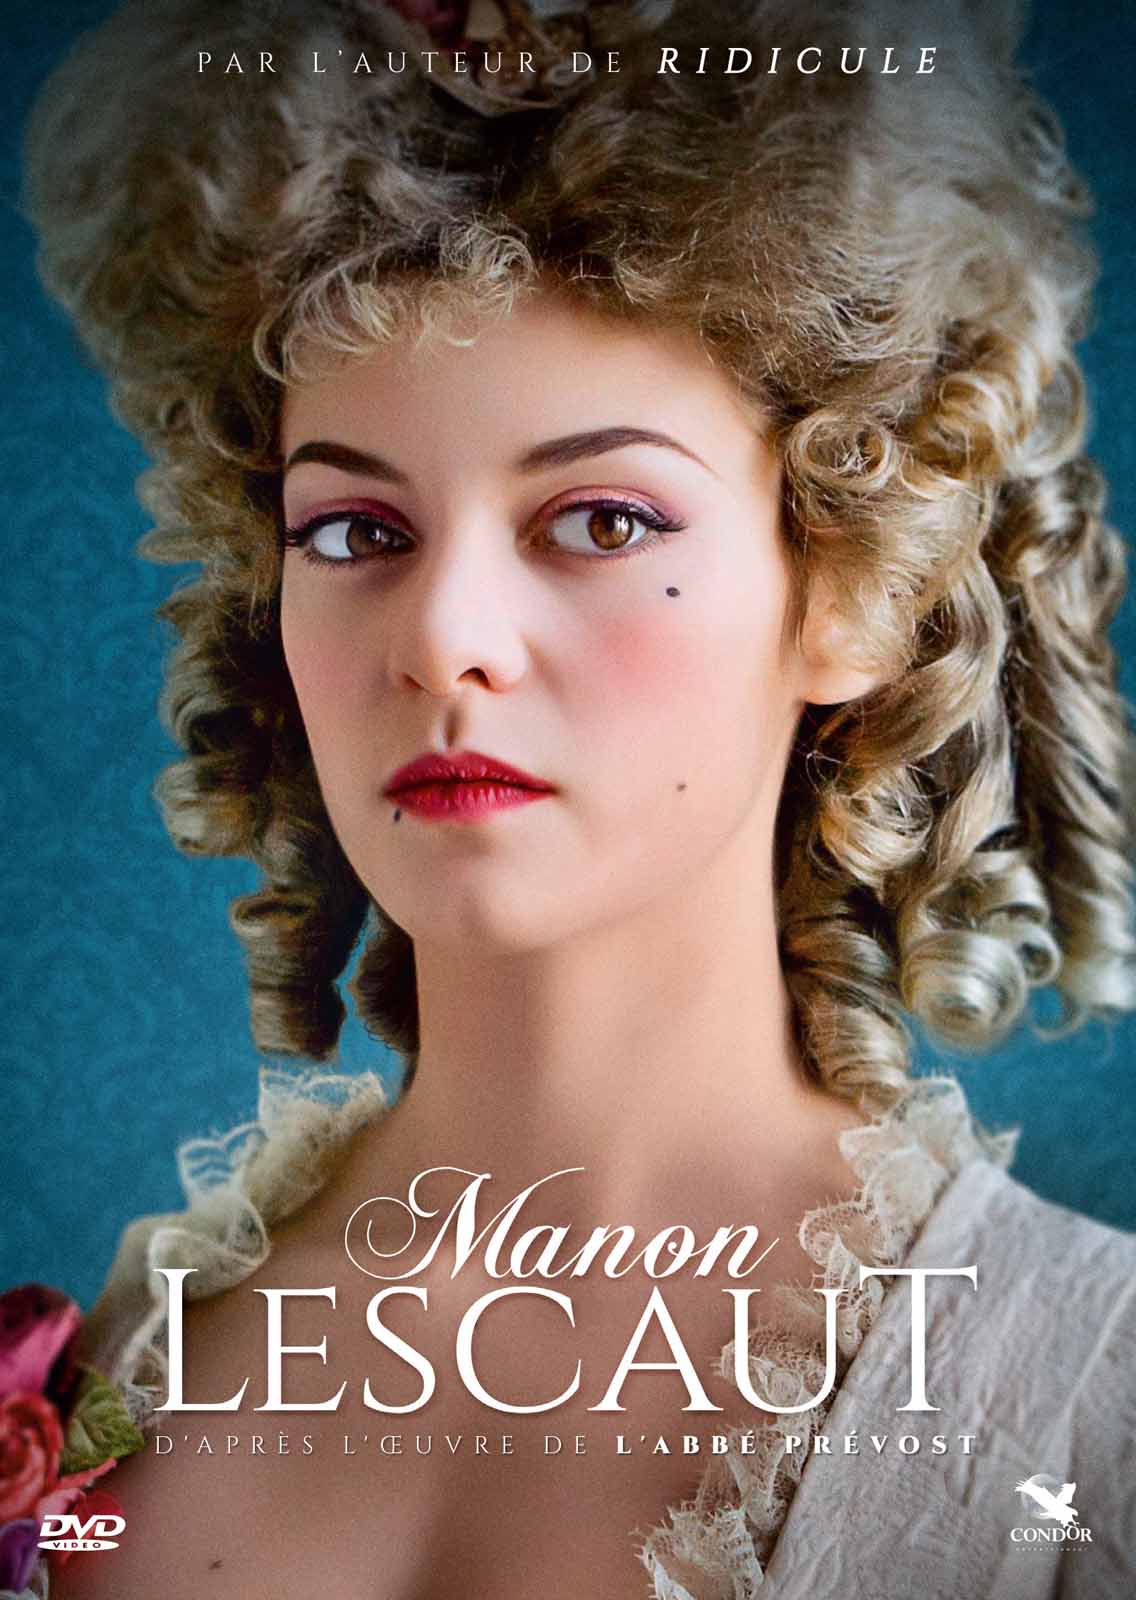 Manon Lescaut streaming vf gratuit